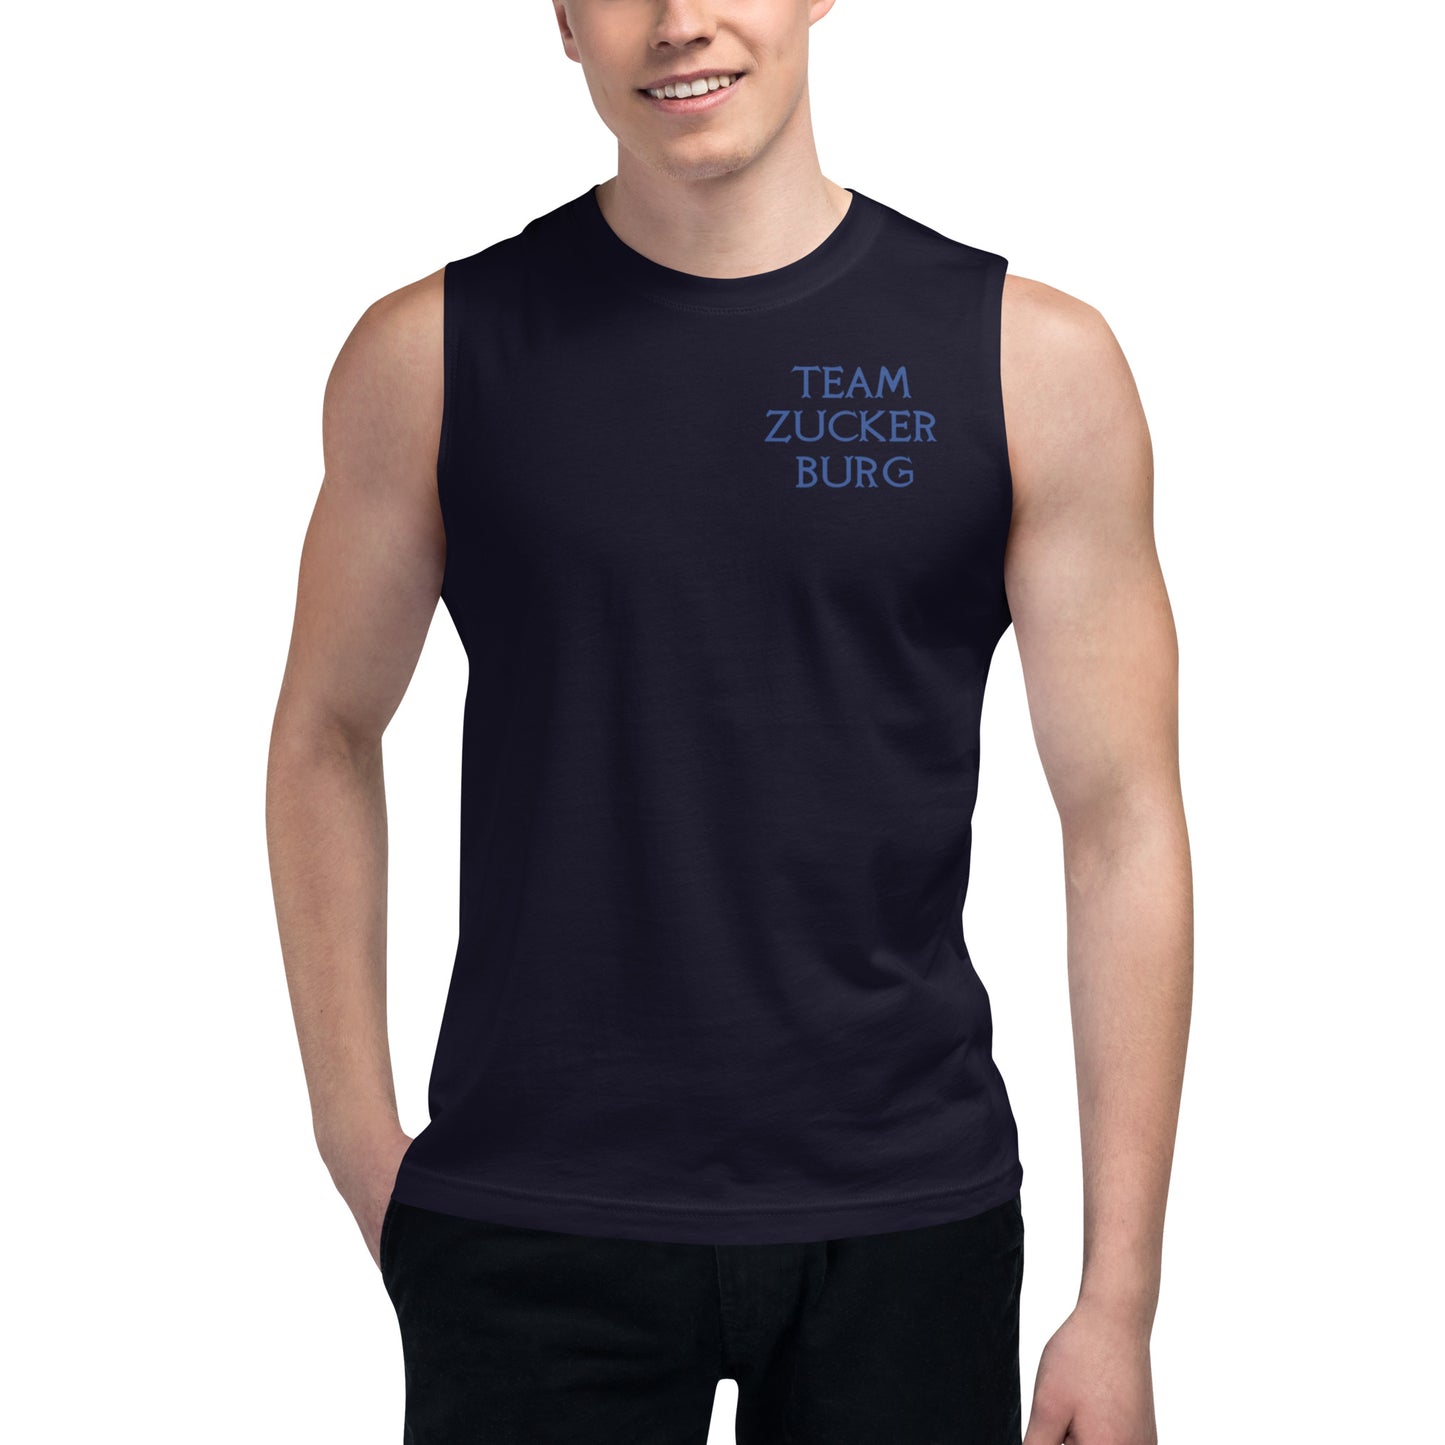 Unisex Muscle Shirt